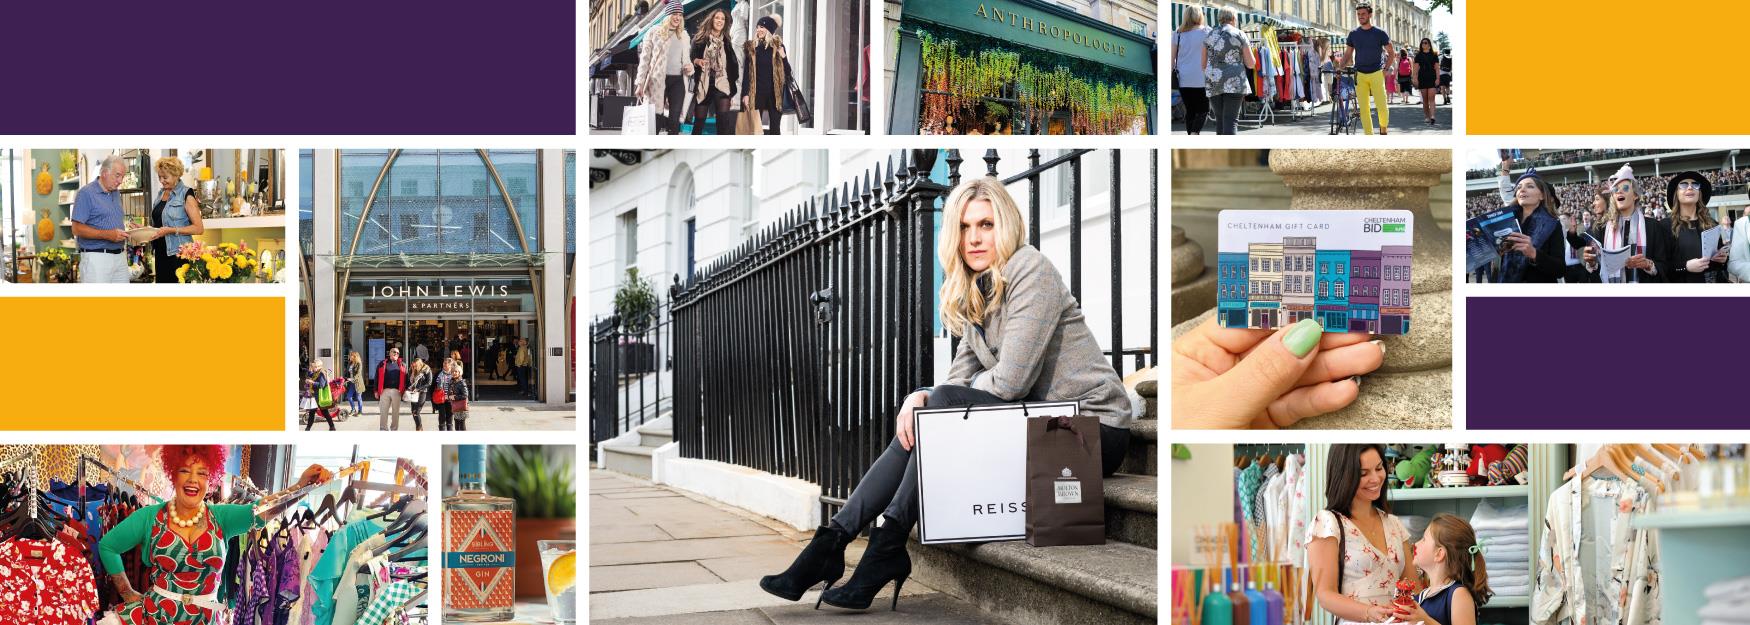 Fashion boutique Mint Velvet is latest retailer to open on Cheltenham's  Promenade - Gloucestershire Live